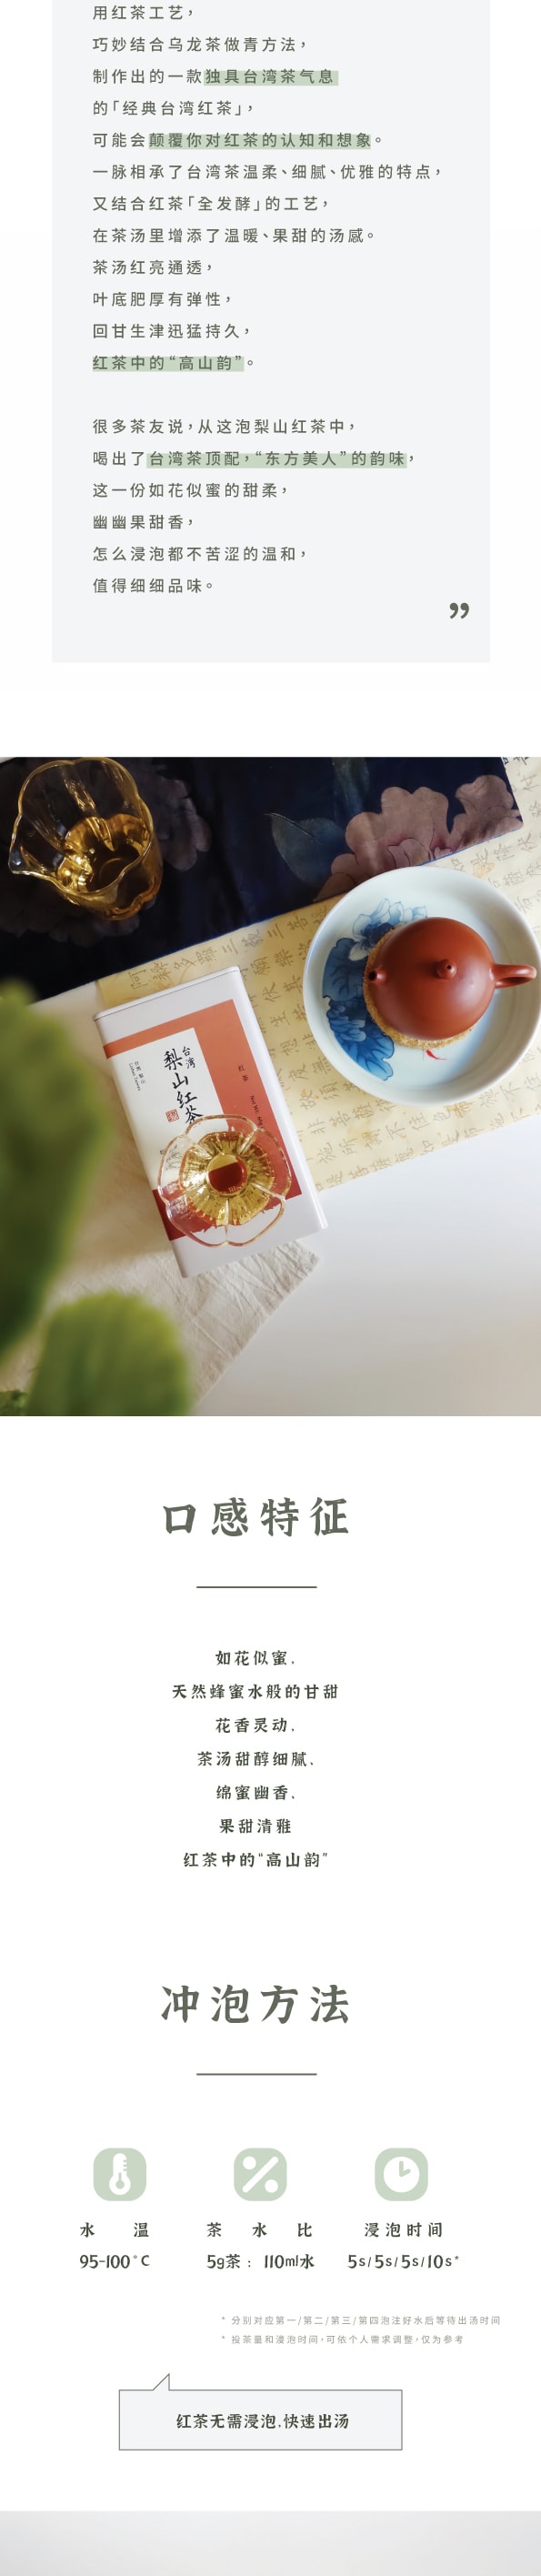 ZhaoTea 梨山紅茶 台灣高等級高山紅茶 花果蜜香 甘甜細膩 茶葉 紅茶60g